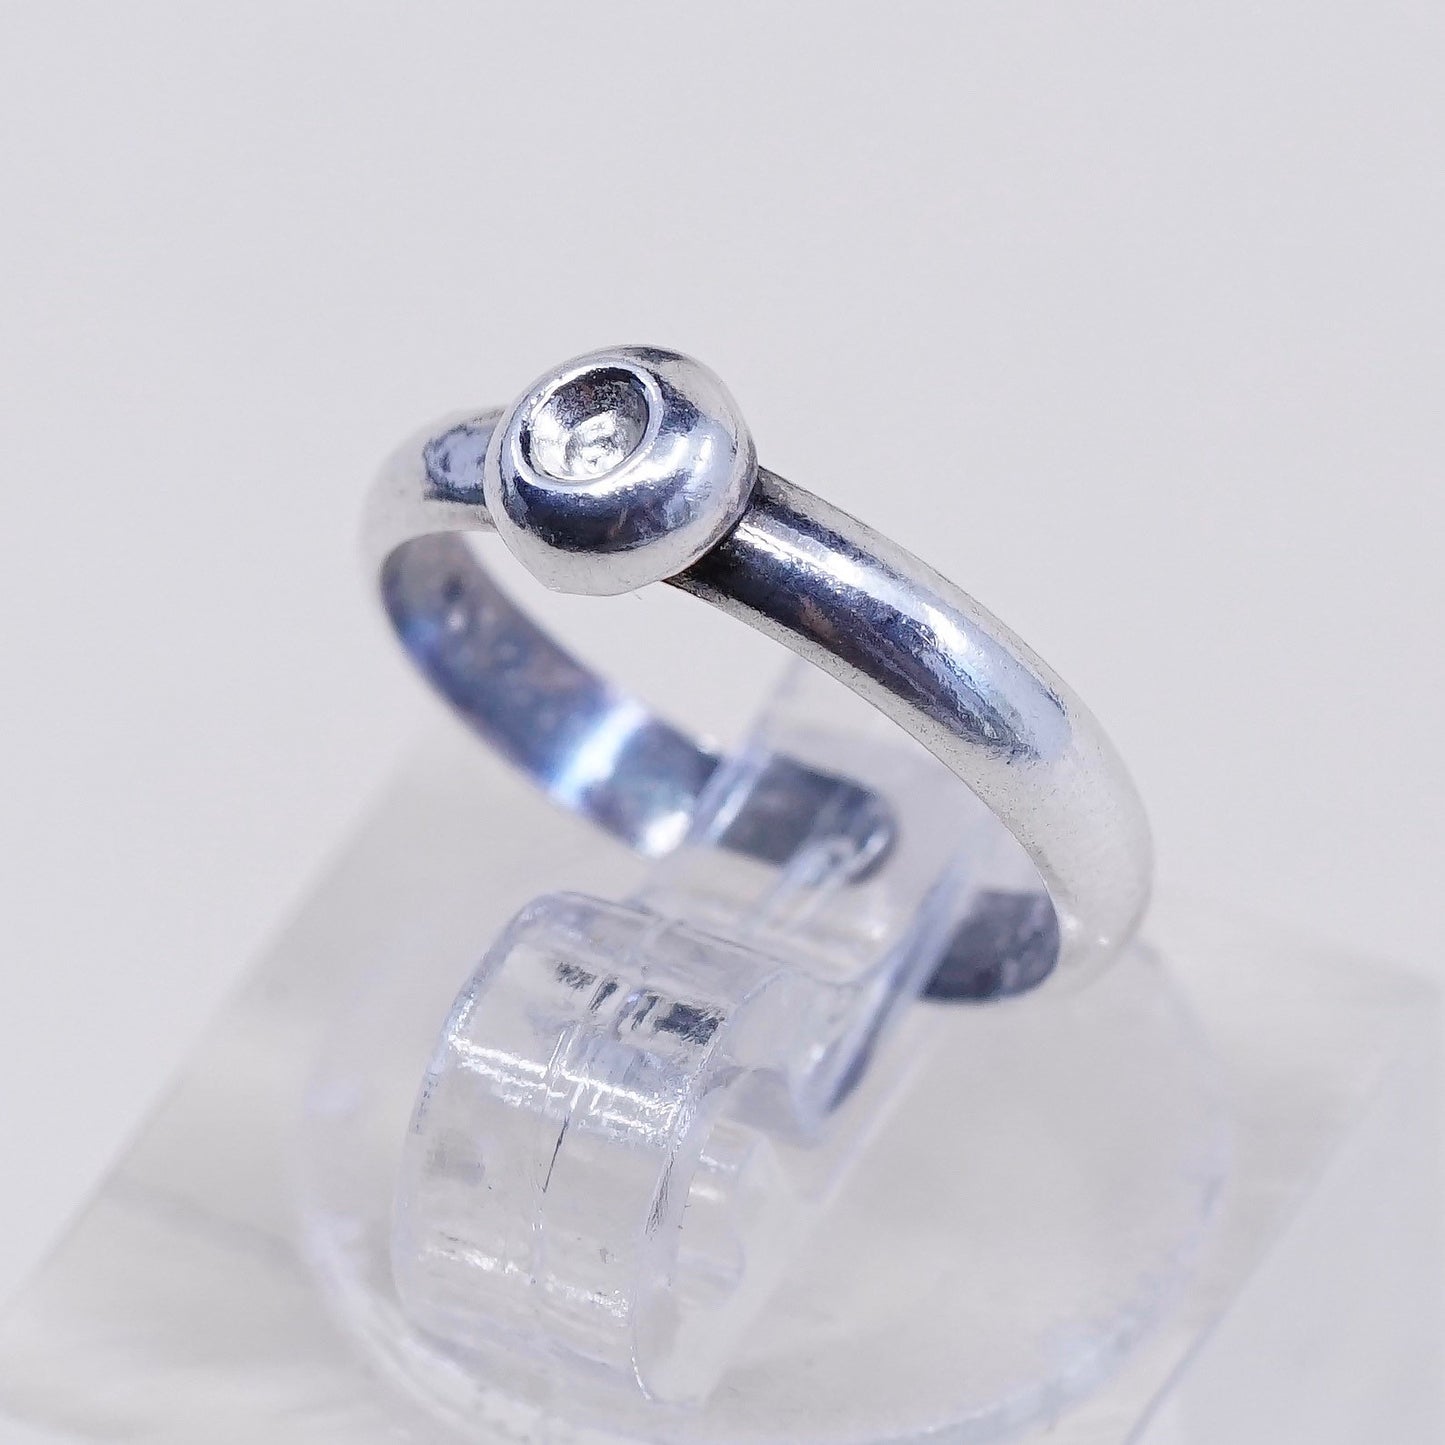 Size 1.5, vintage Sterling silver handmade ring